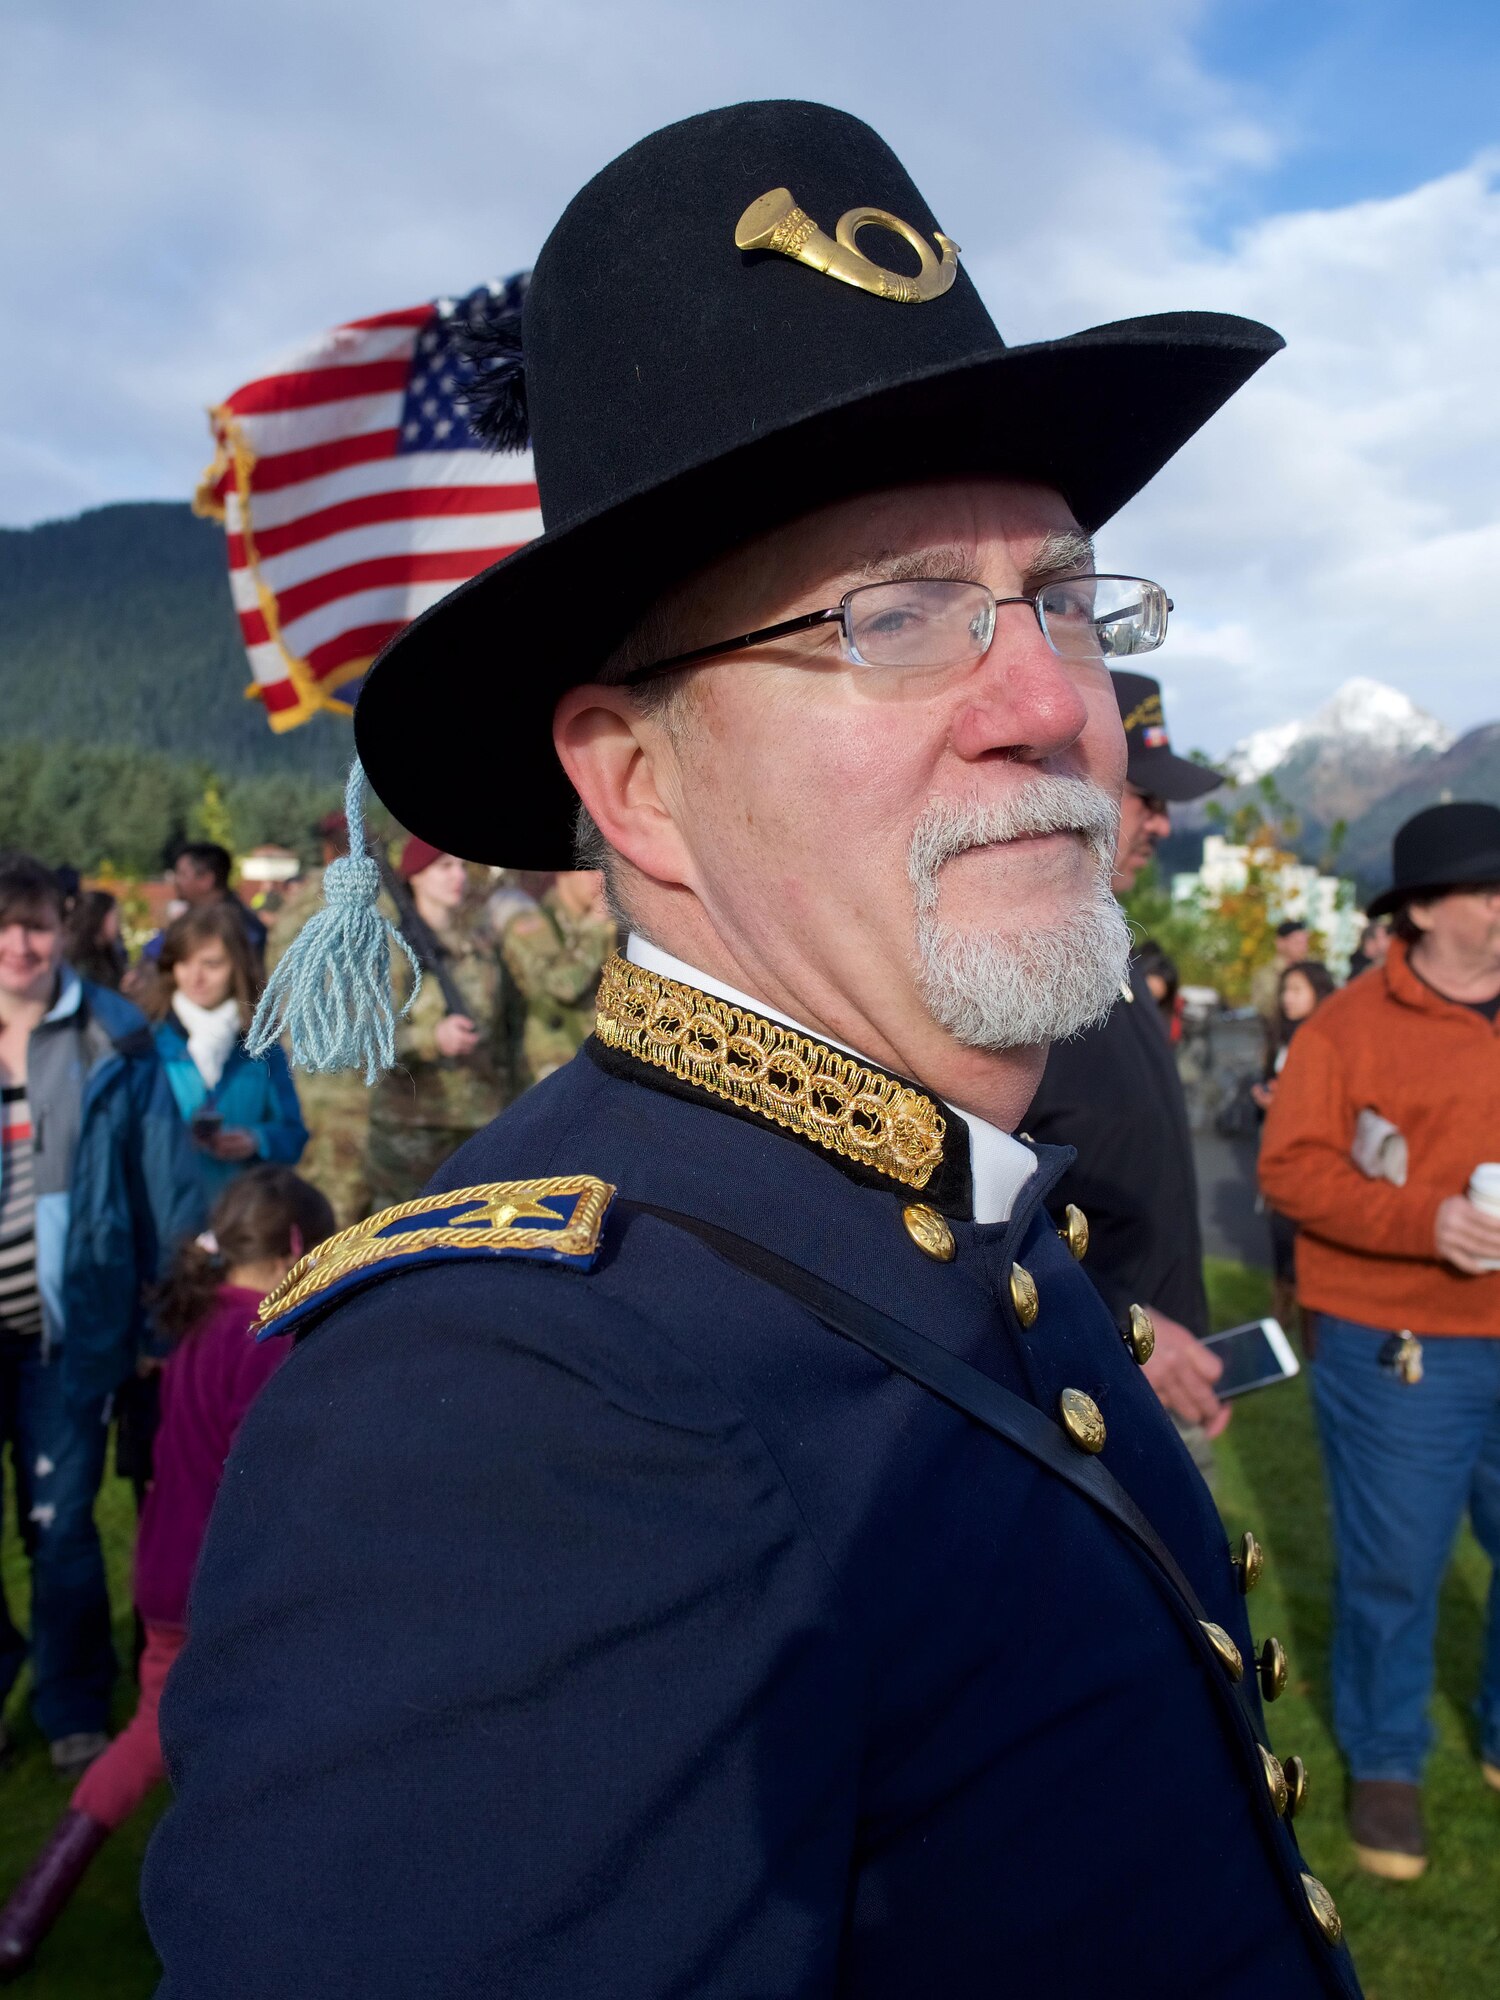 Military in Alaska celebrates 150 years since transfer of Alaska